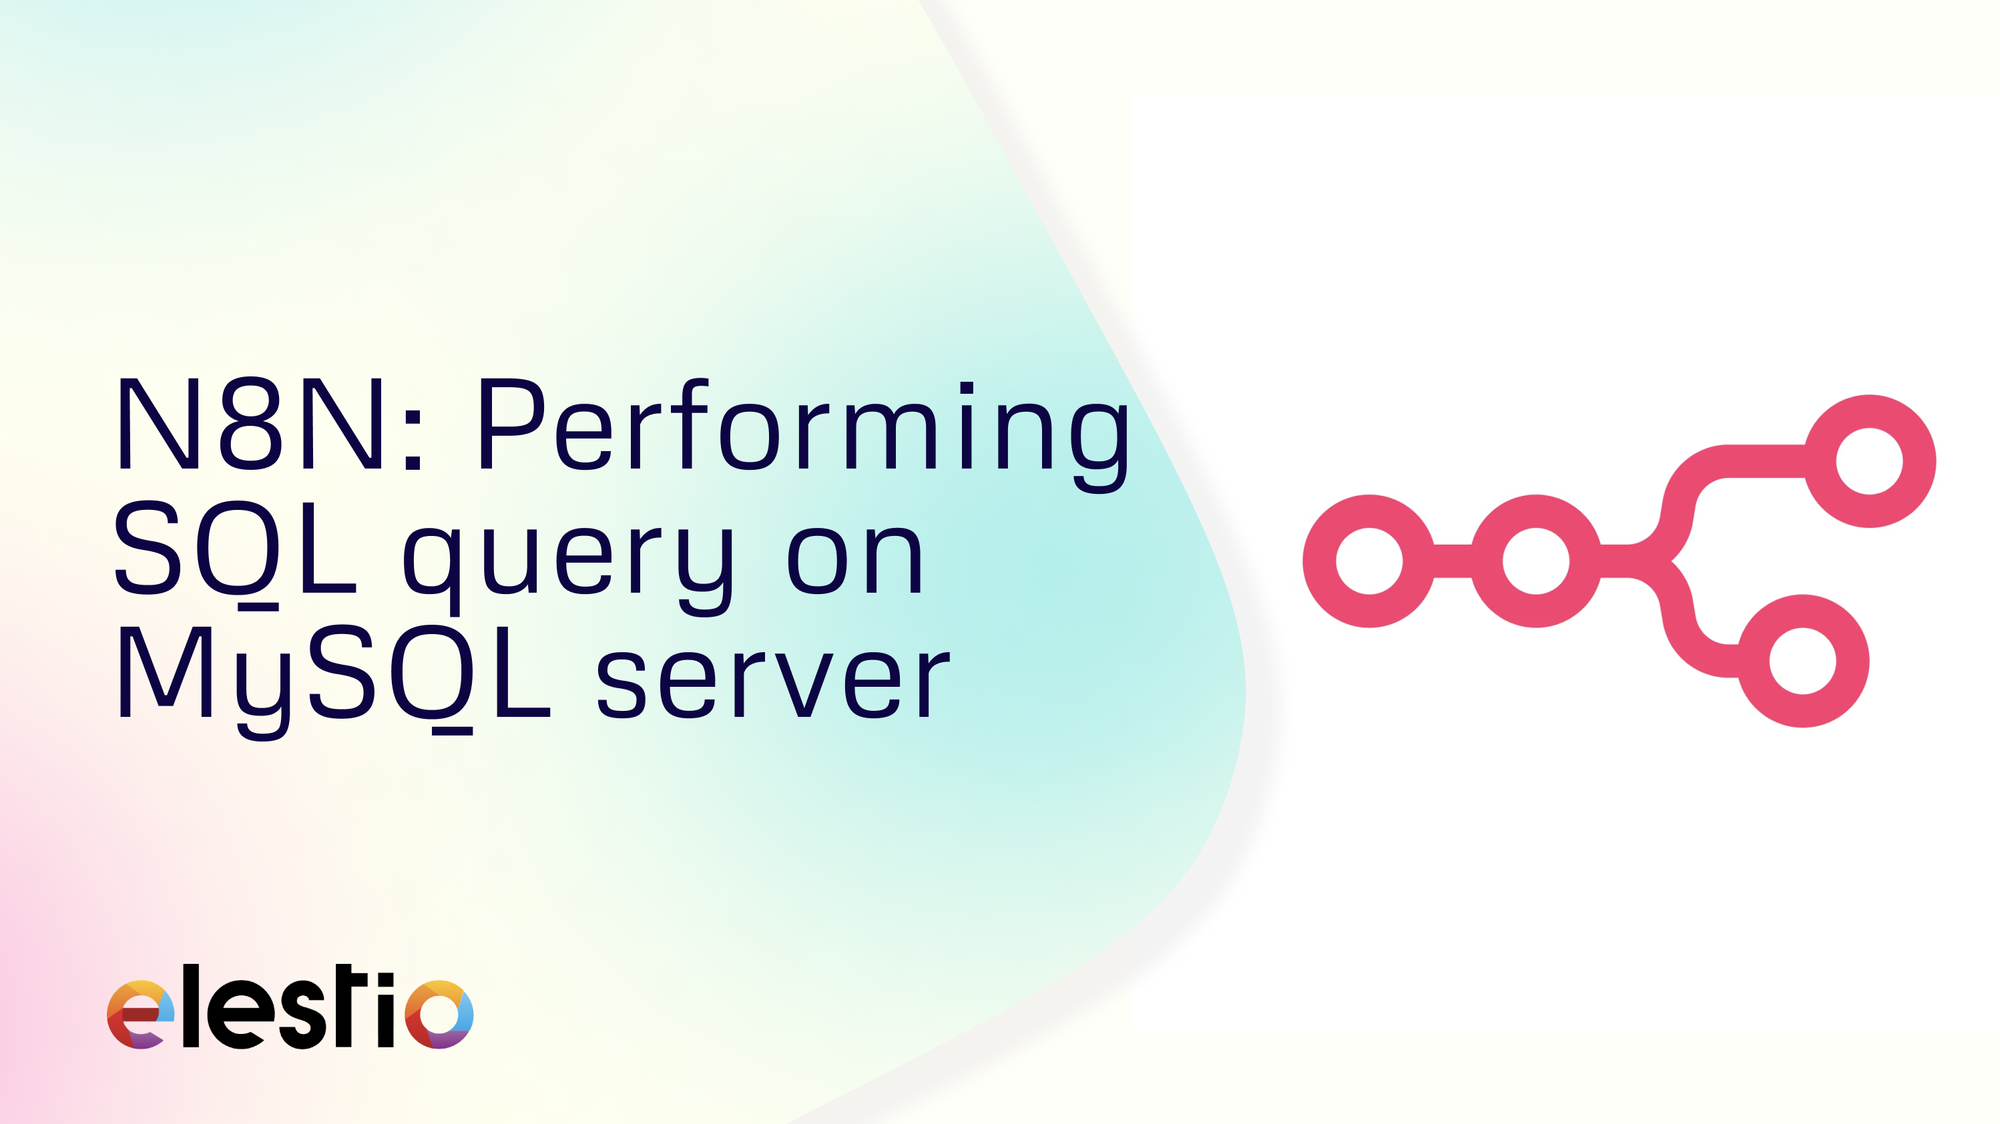 N8N: Performing SQL query on MySQL server